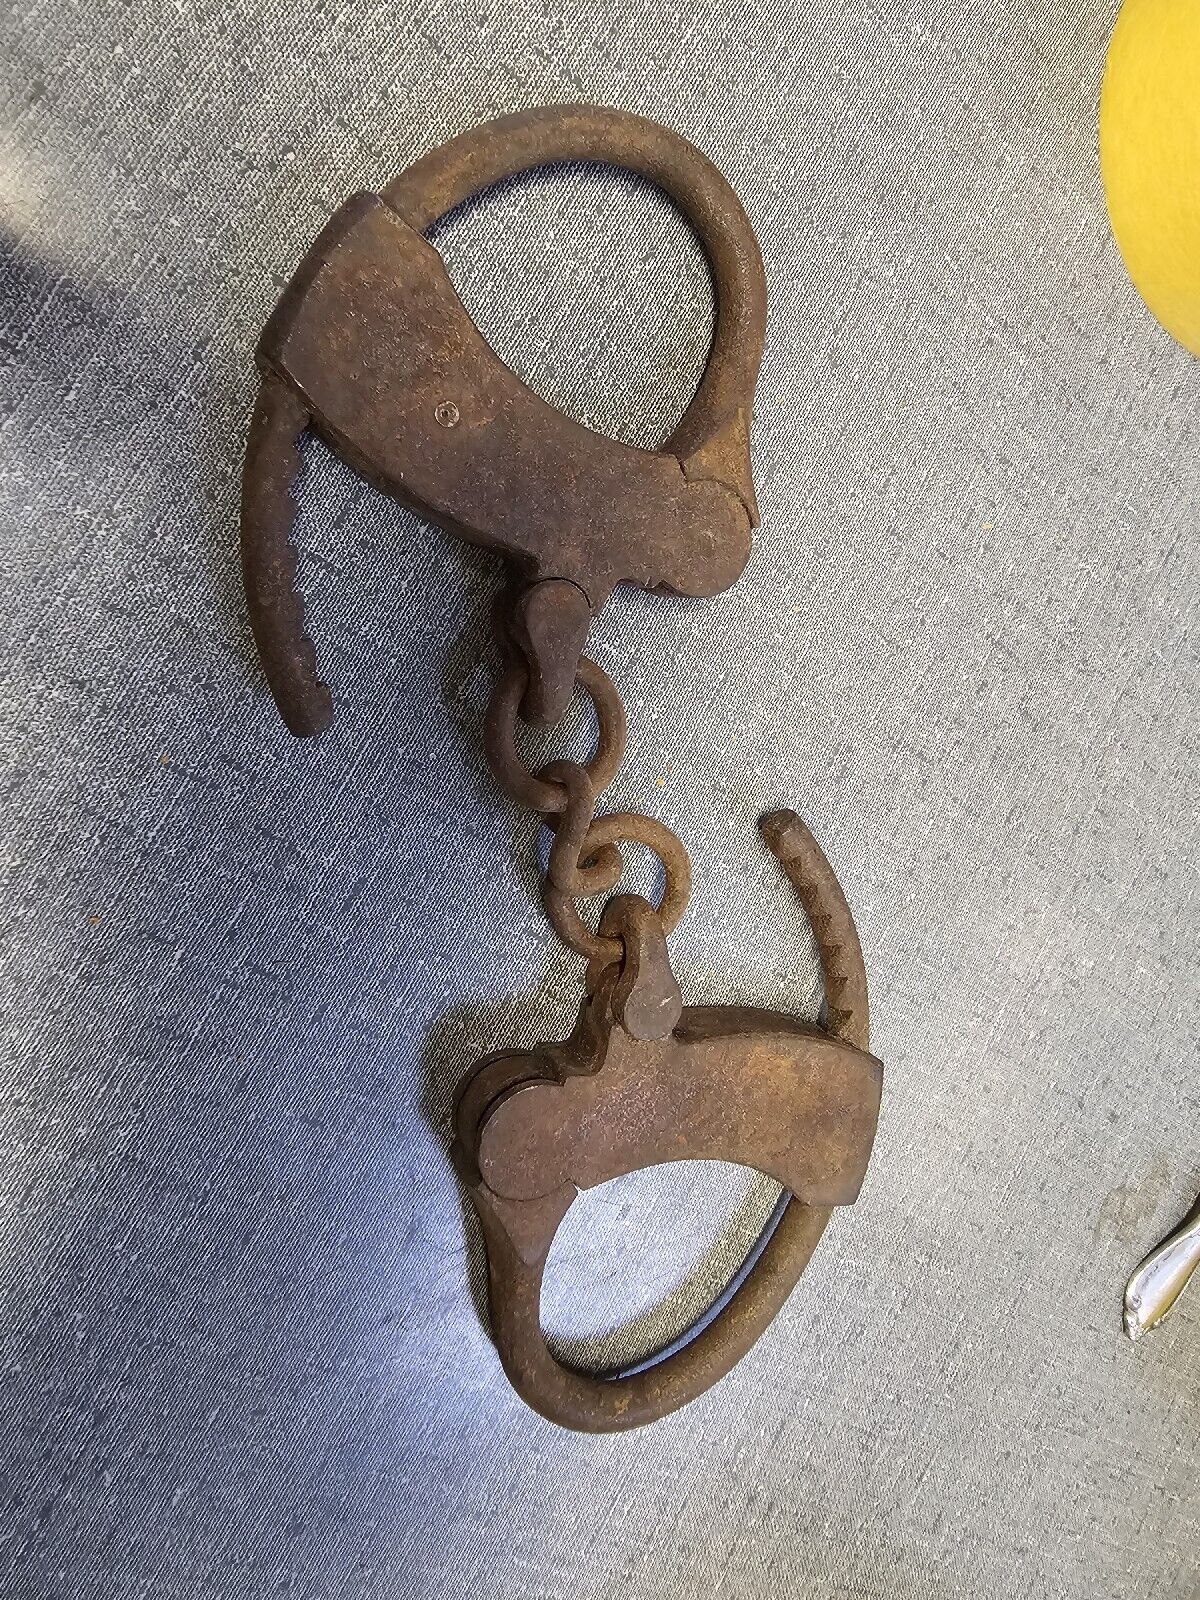 Antique Patent Mattatuck Handcuffs Restraints (NO KEY)